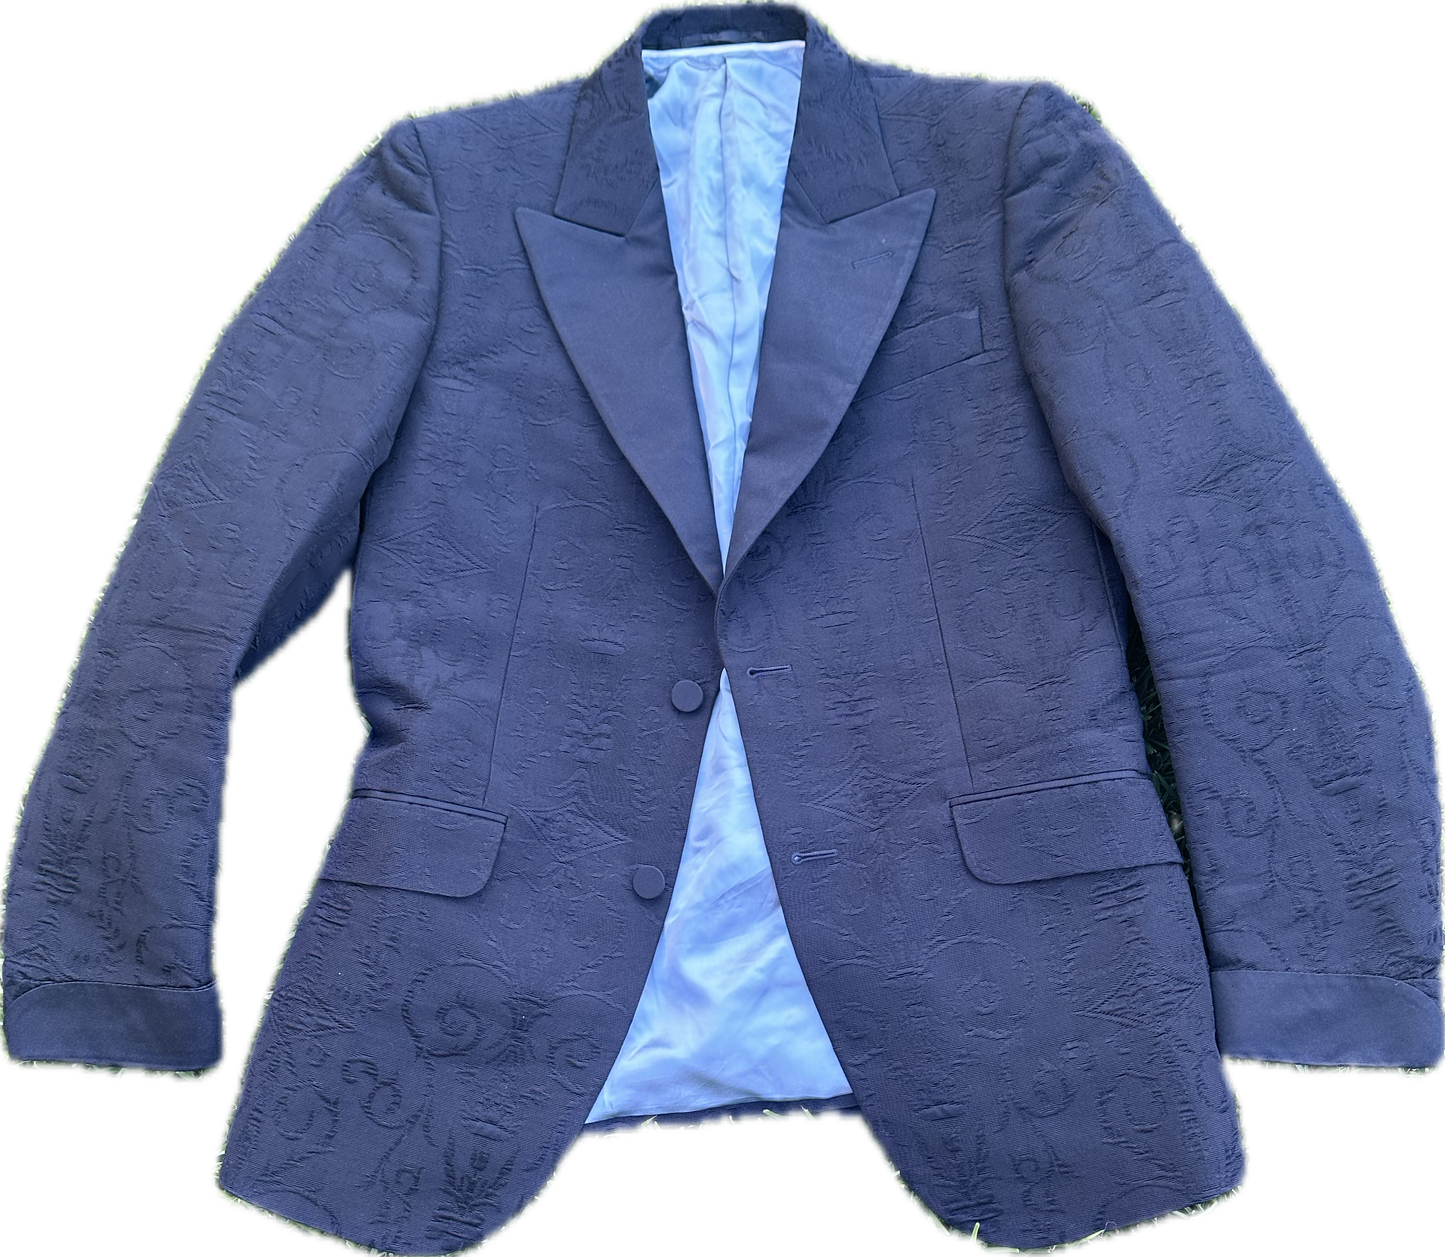 The Gentlemen: Matthew's GUCCI Tuxedo Jacket (48R IT/38R)